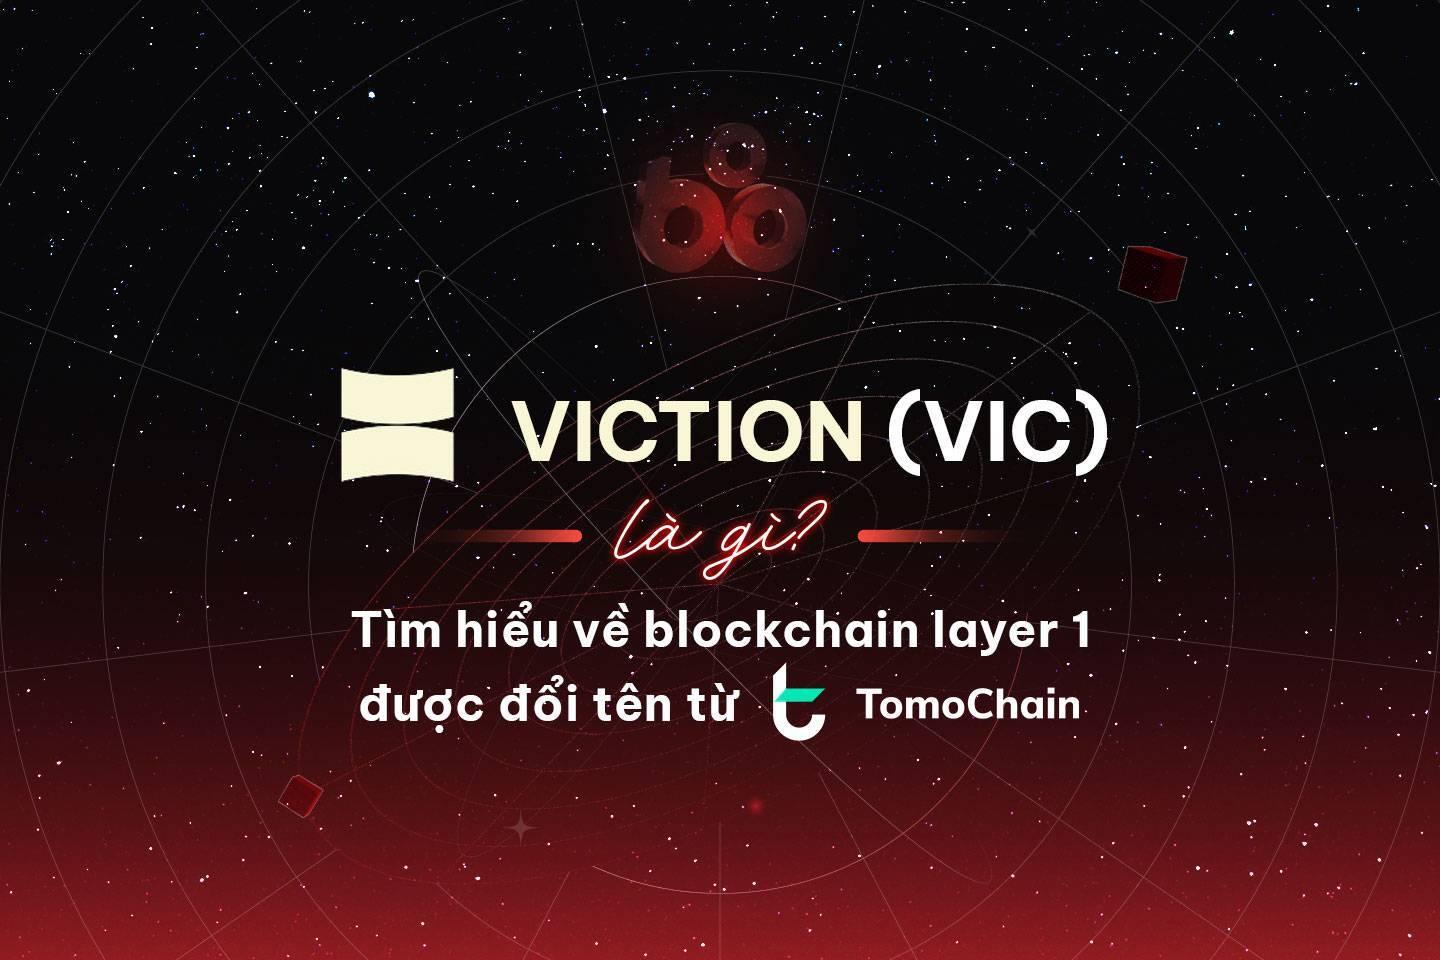 viction-vic-la-gi-tim-hieu-ve-blockchain-layer-1-duoc-doi-ten-tu-tomochain